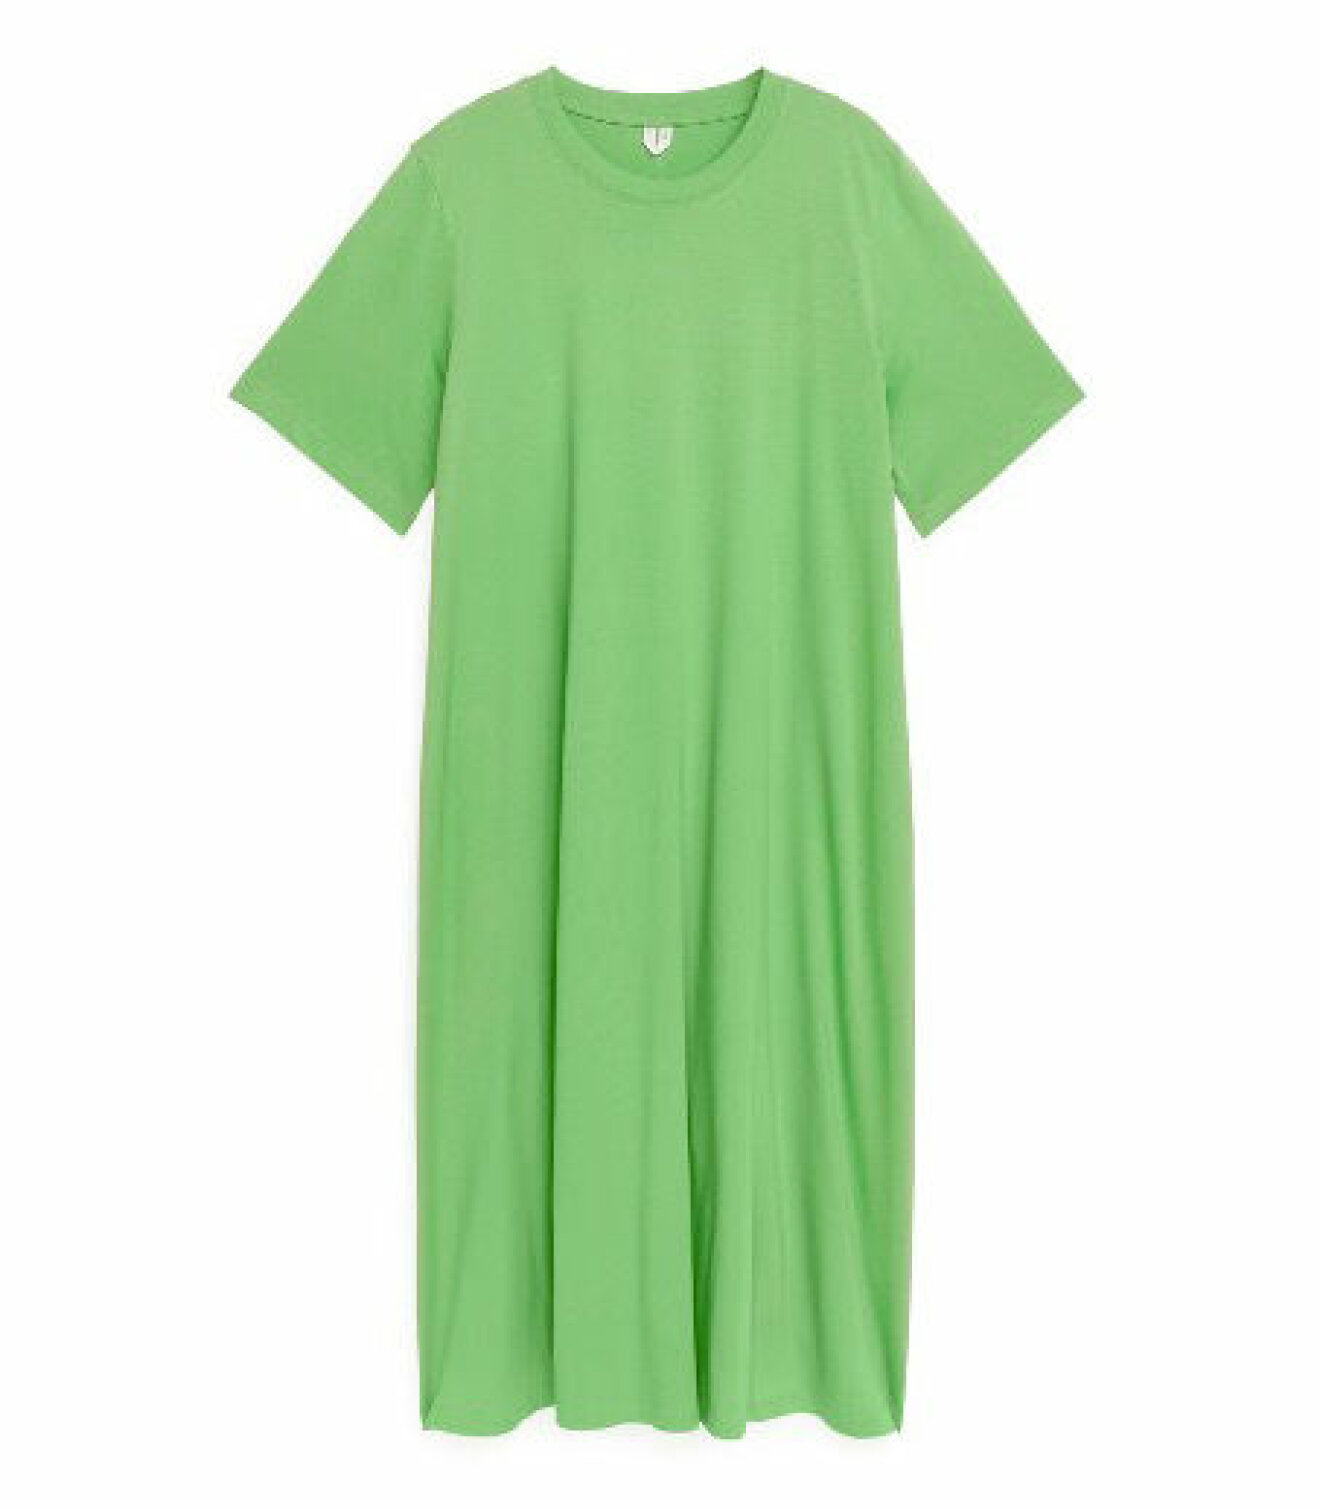 grön t-shirtklänning